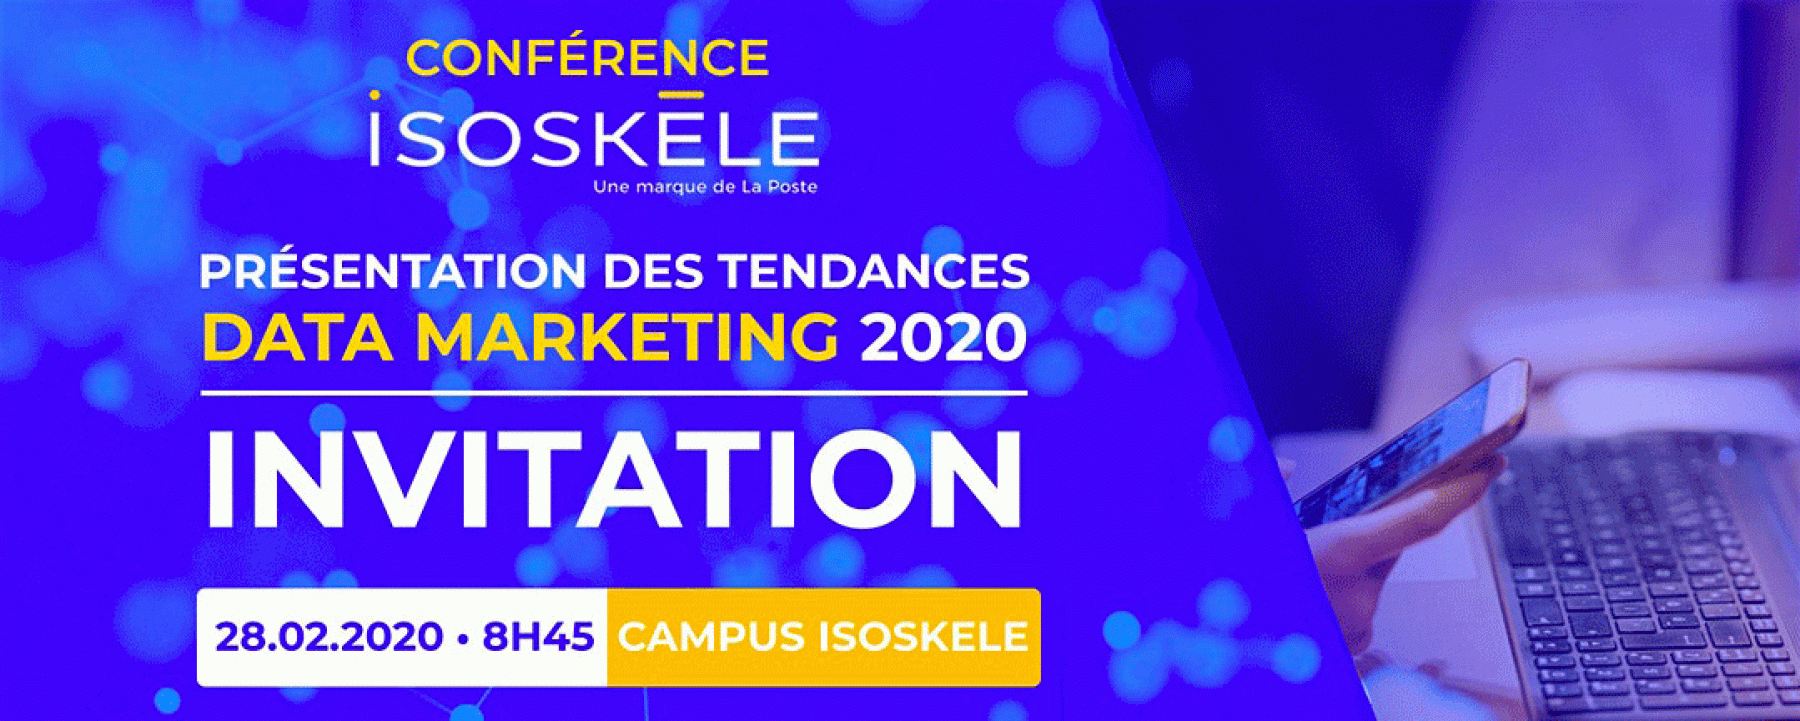 Tendances data marketing 2020 Isoskele